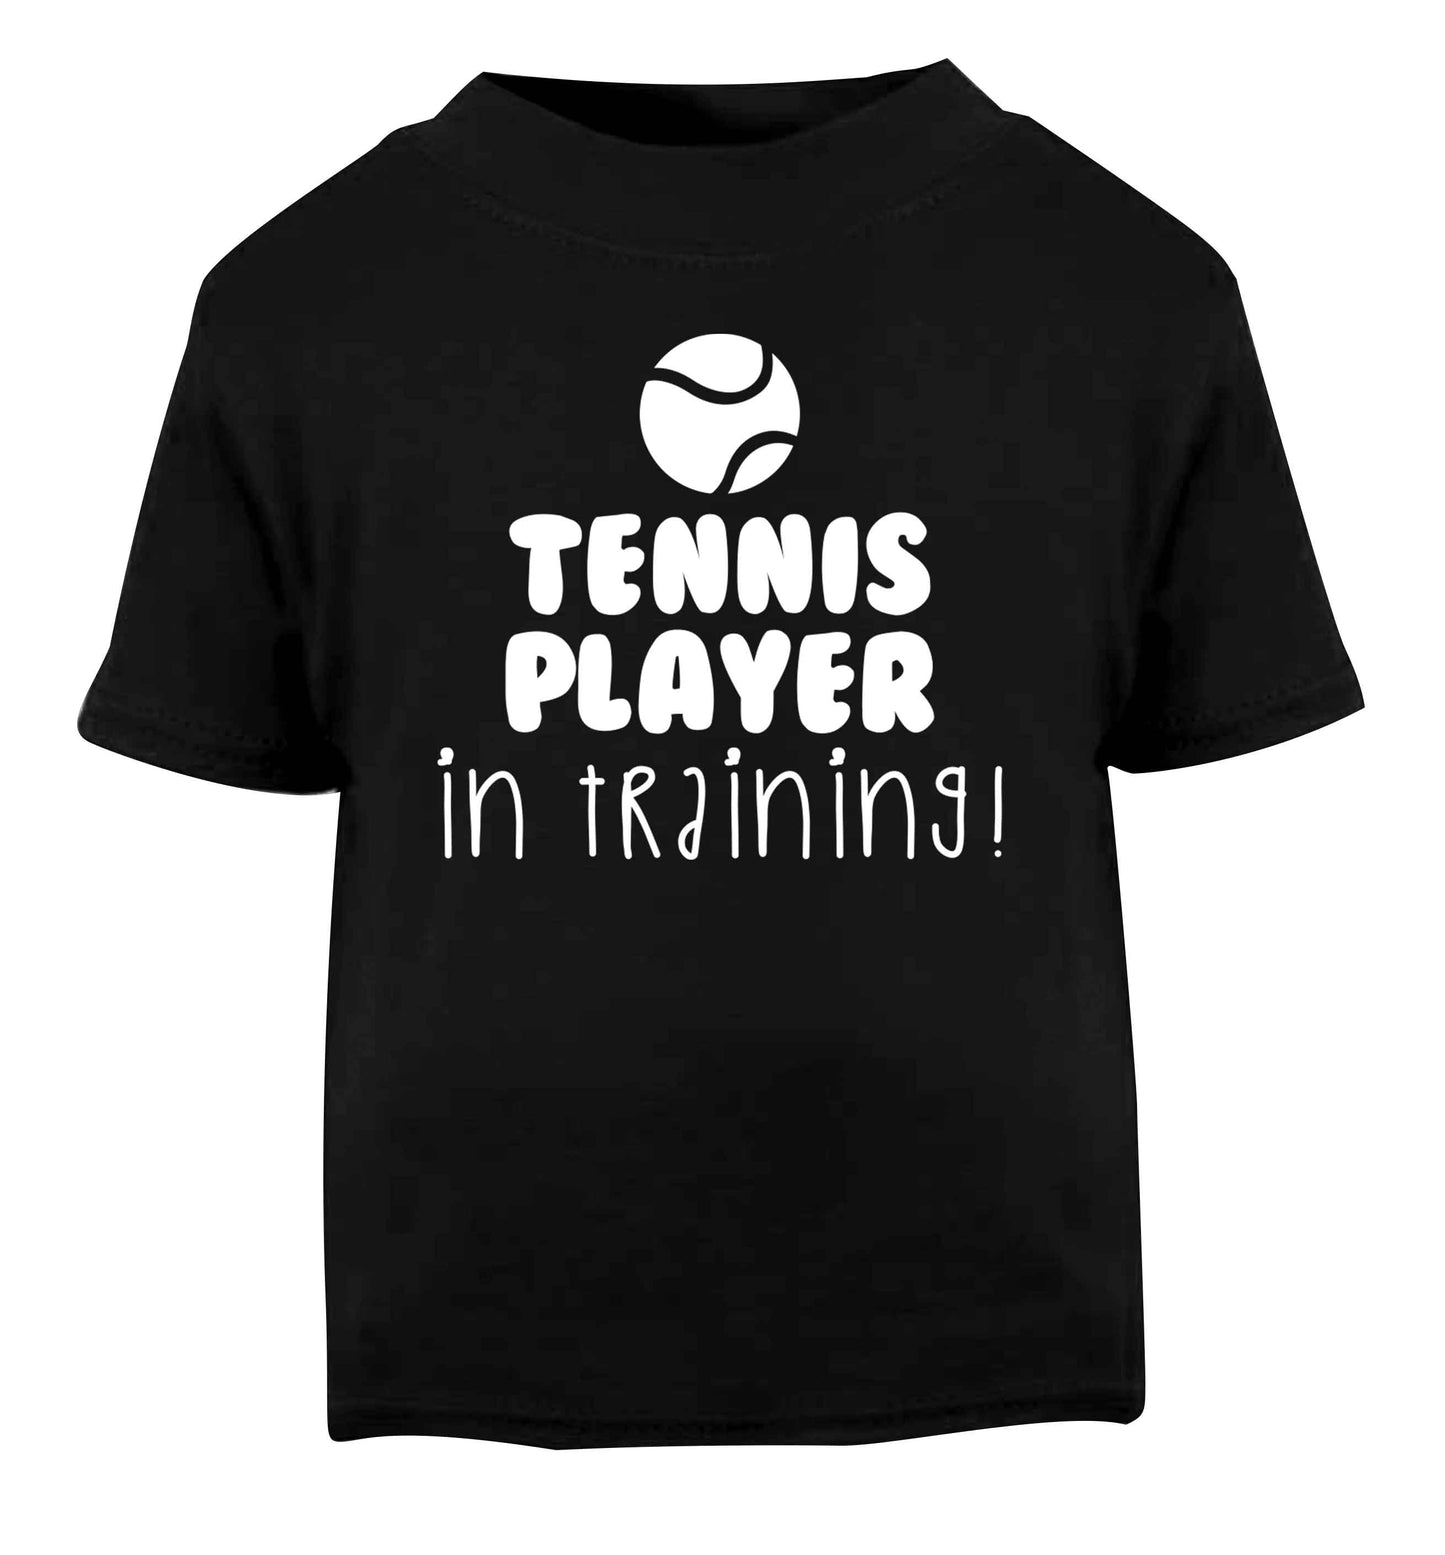 Tennis player in training Black Baby Toddler Tshirt 2 years